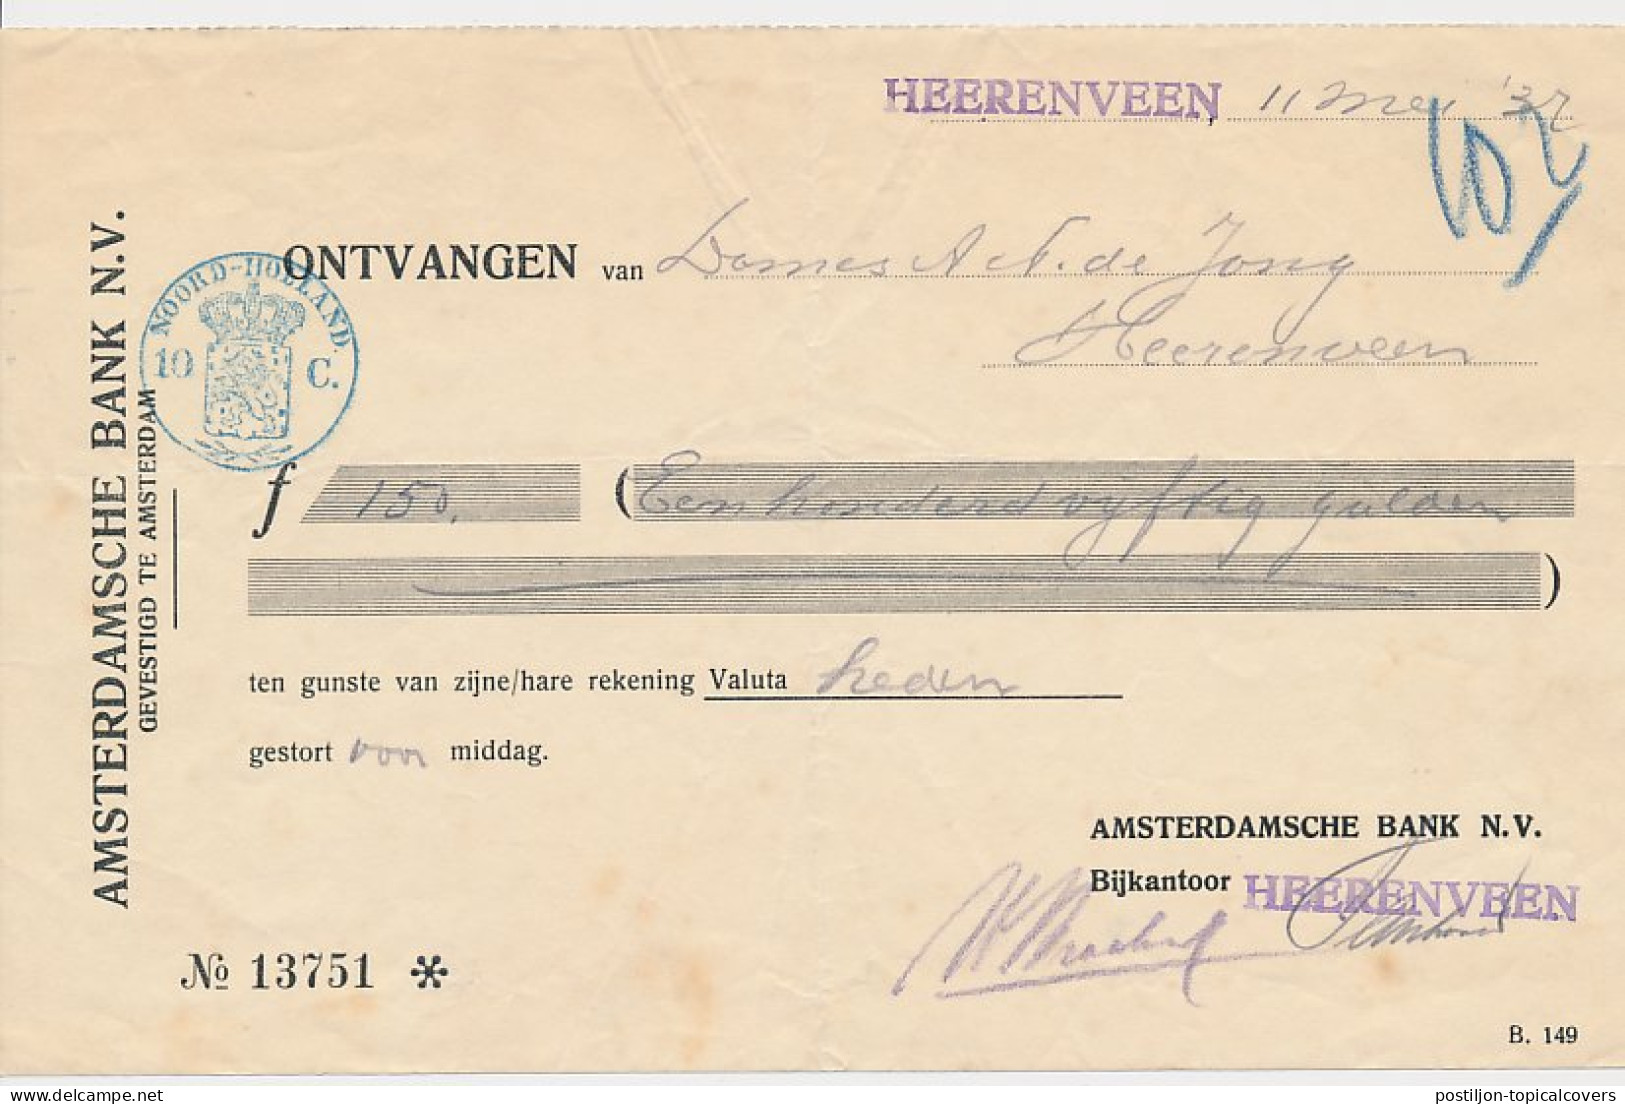 Fiscaal / Revenue - 10 C. Noord Holland - 1937 - Revenue Stamps